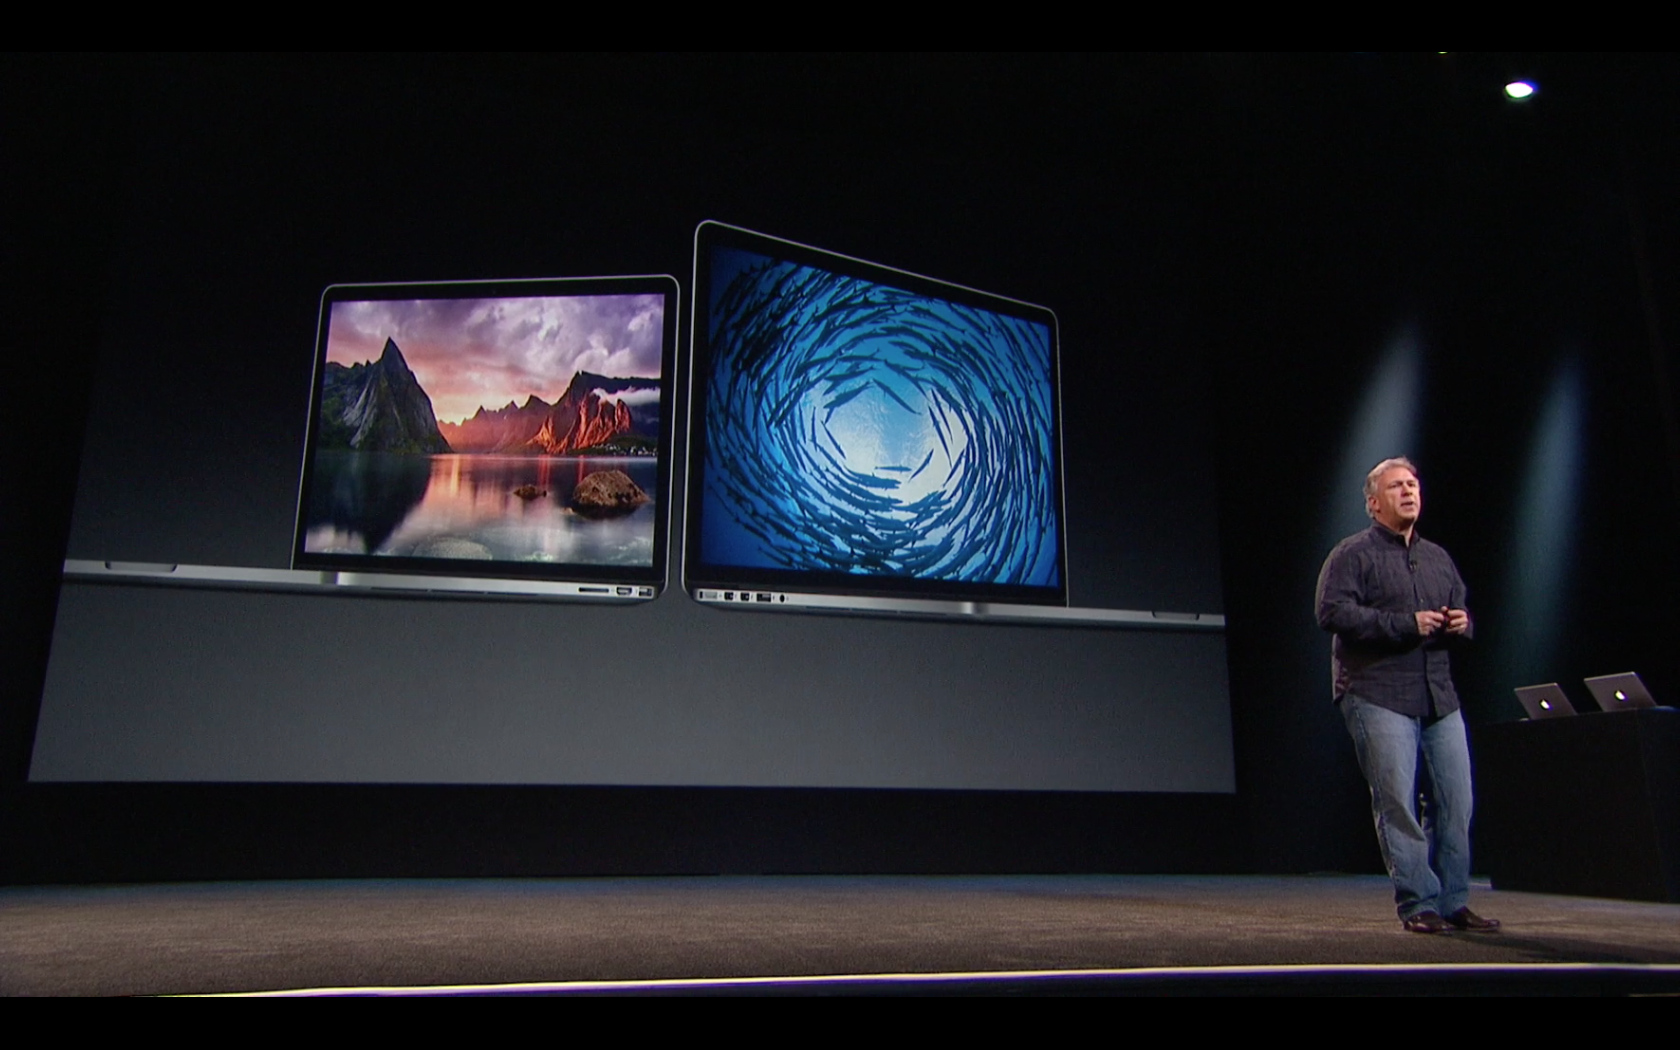 New MacBook Pro Retina Release Date Announced with Price Cut